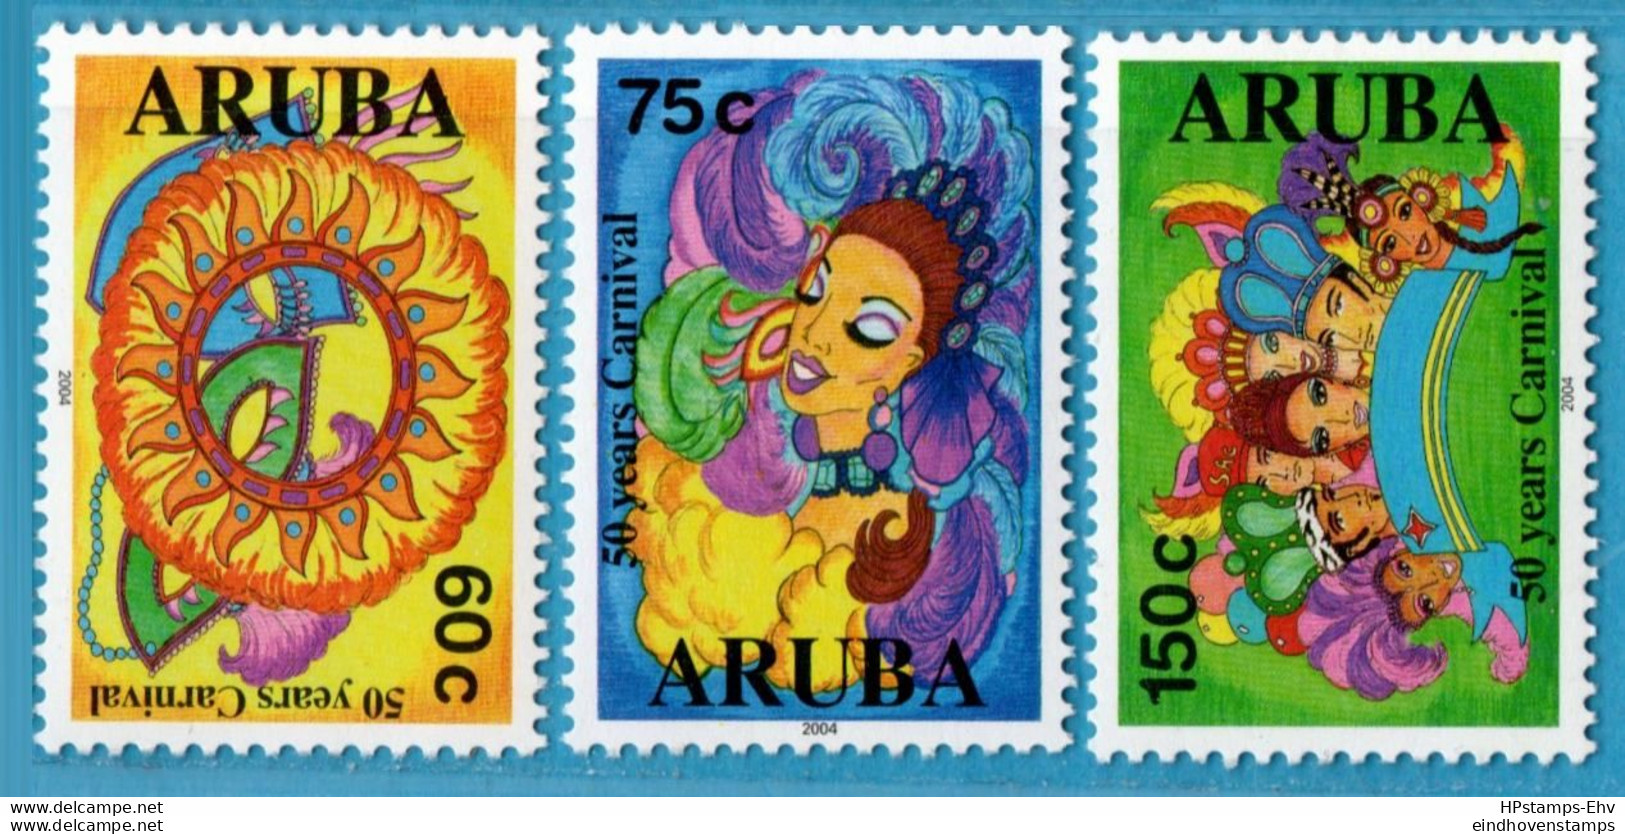 Aruba 2004 Carnavale 3 Values 04-01 MNH Masks, Costumes - Carnaval